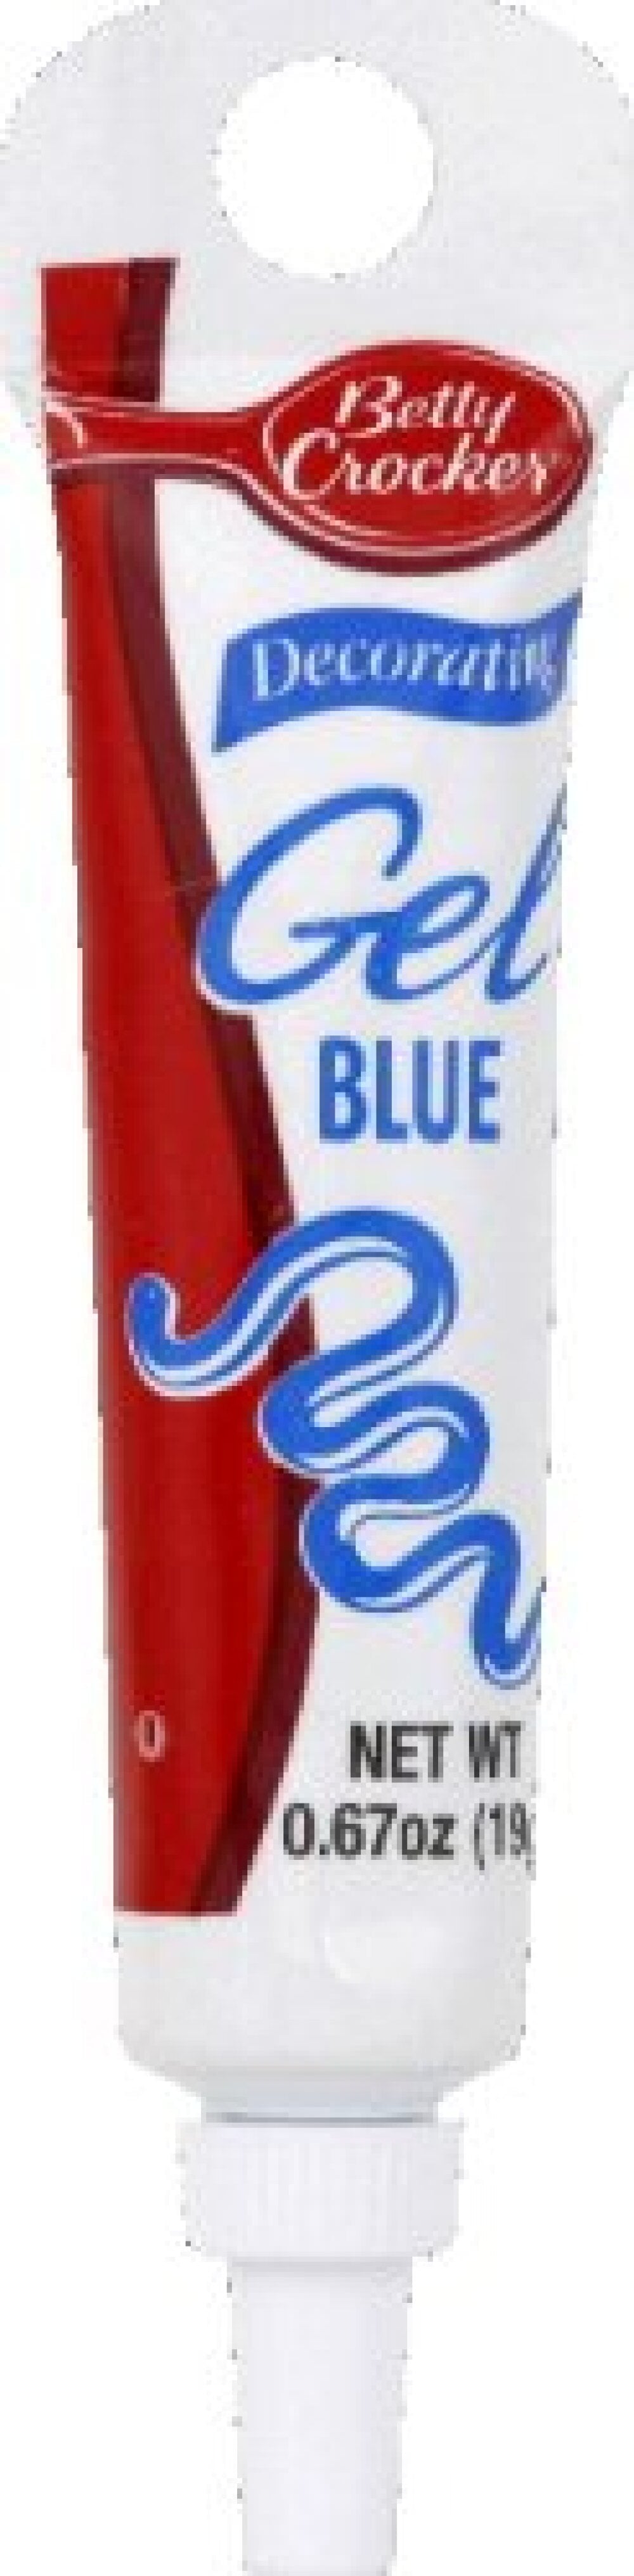 Betty Crocker Blue Decorating Gel .67 oz Tube